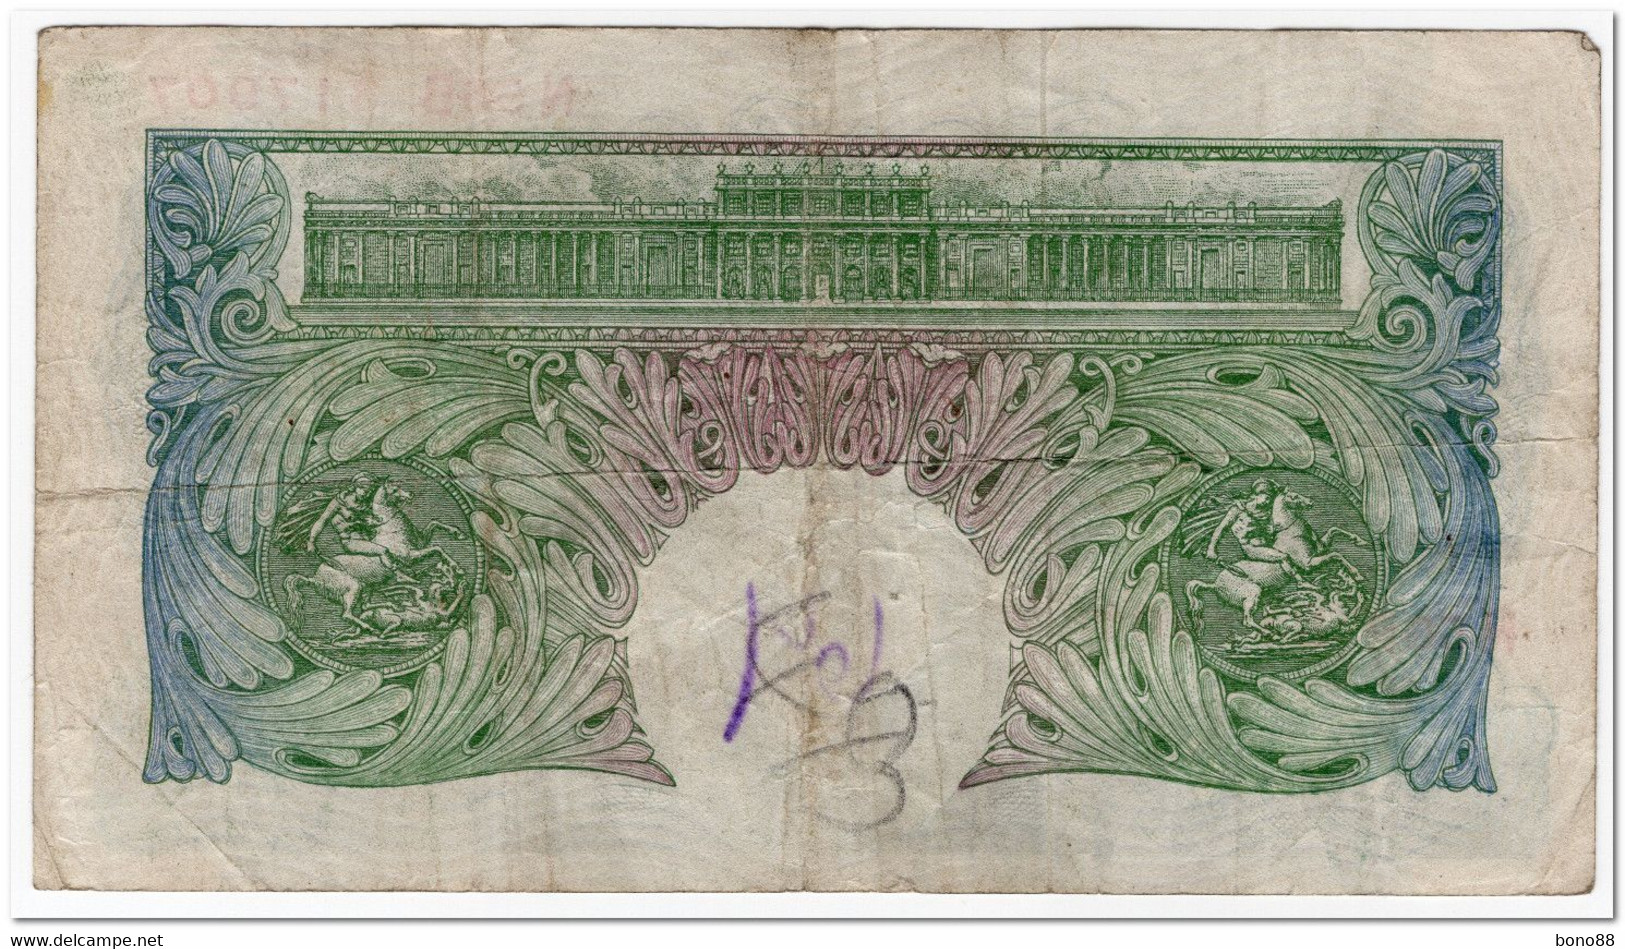 GREAT BRITAIN,1 POUND,1949-55,P.369b,FINE,2 PIN HOLES,GRAFFITI - 1 Pound